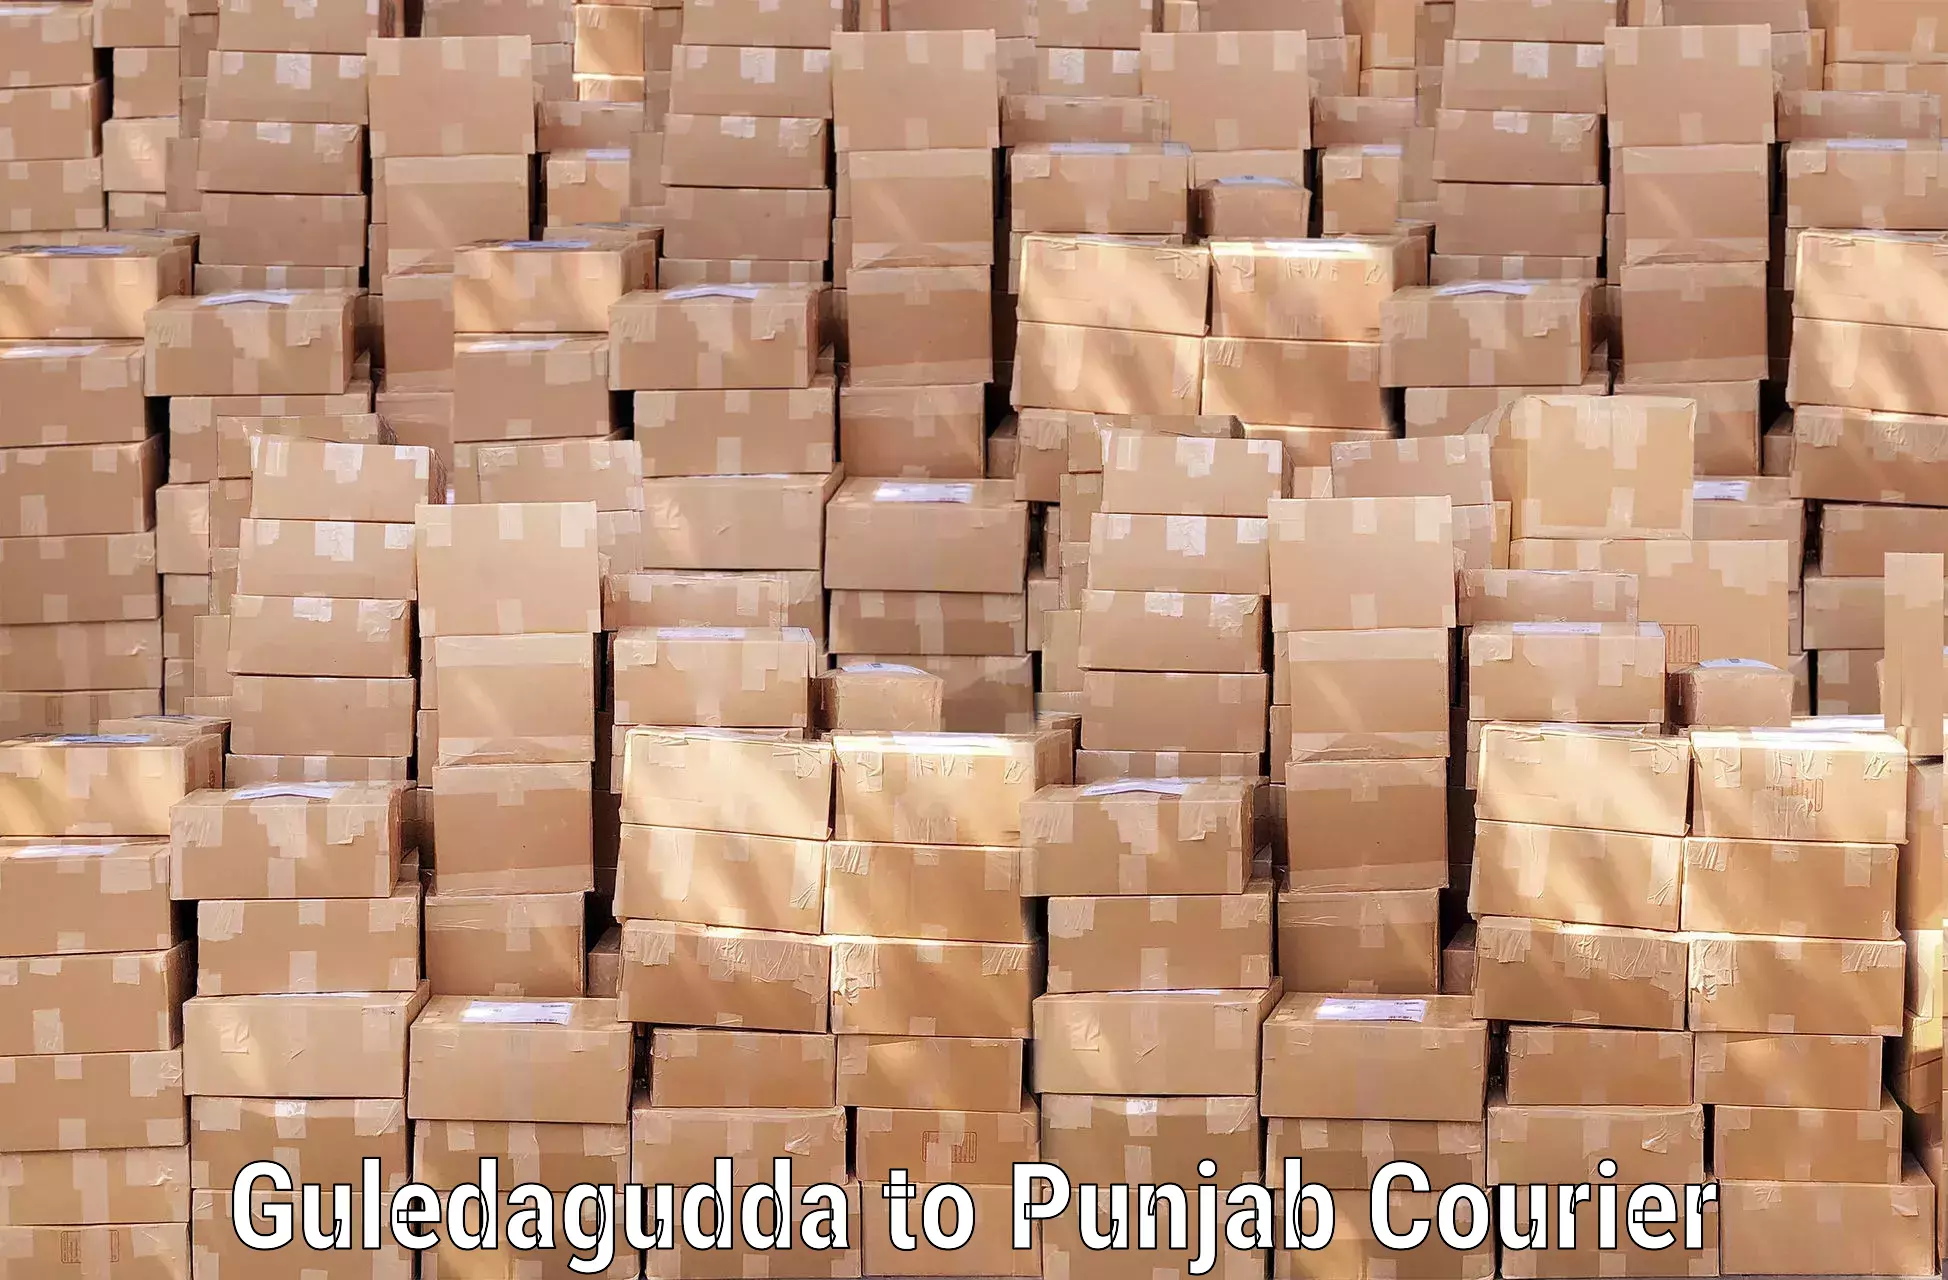 Luggage dispatch service Guledagudda to Punjab